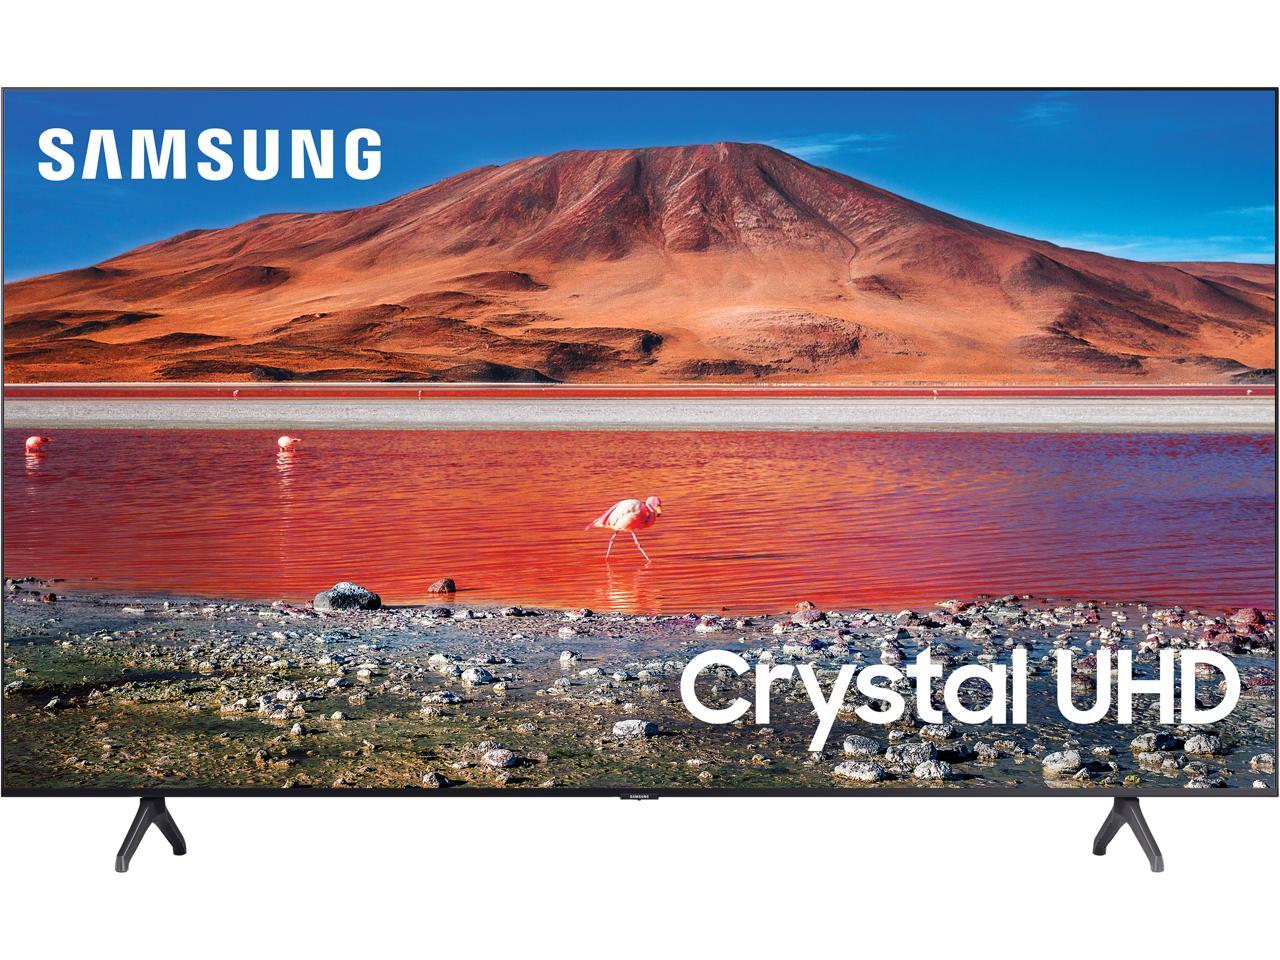 Samsung 43" TU7000 Crystal 4K UHD Smart TV